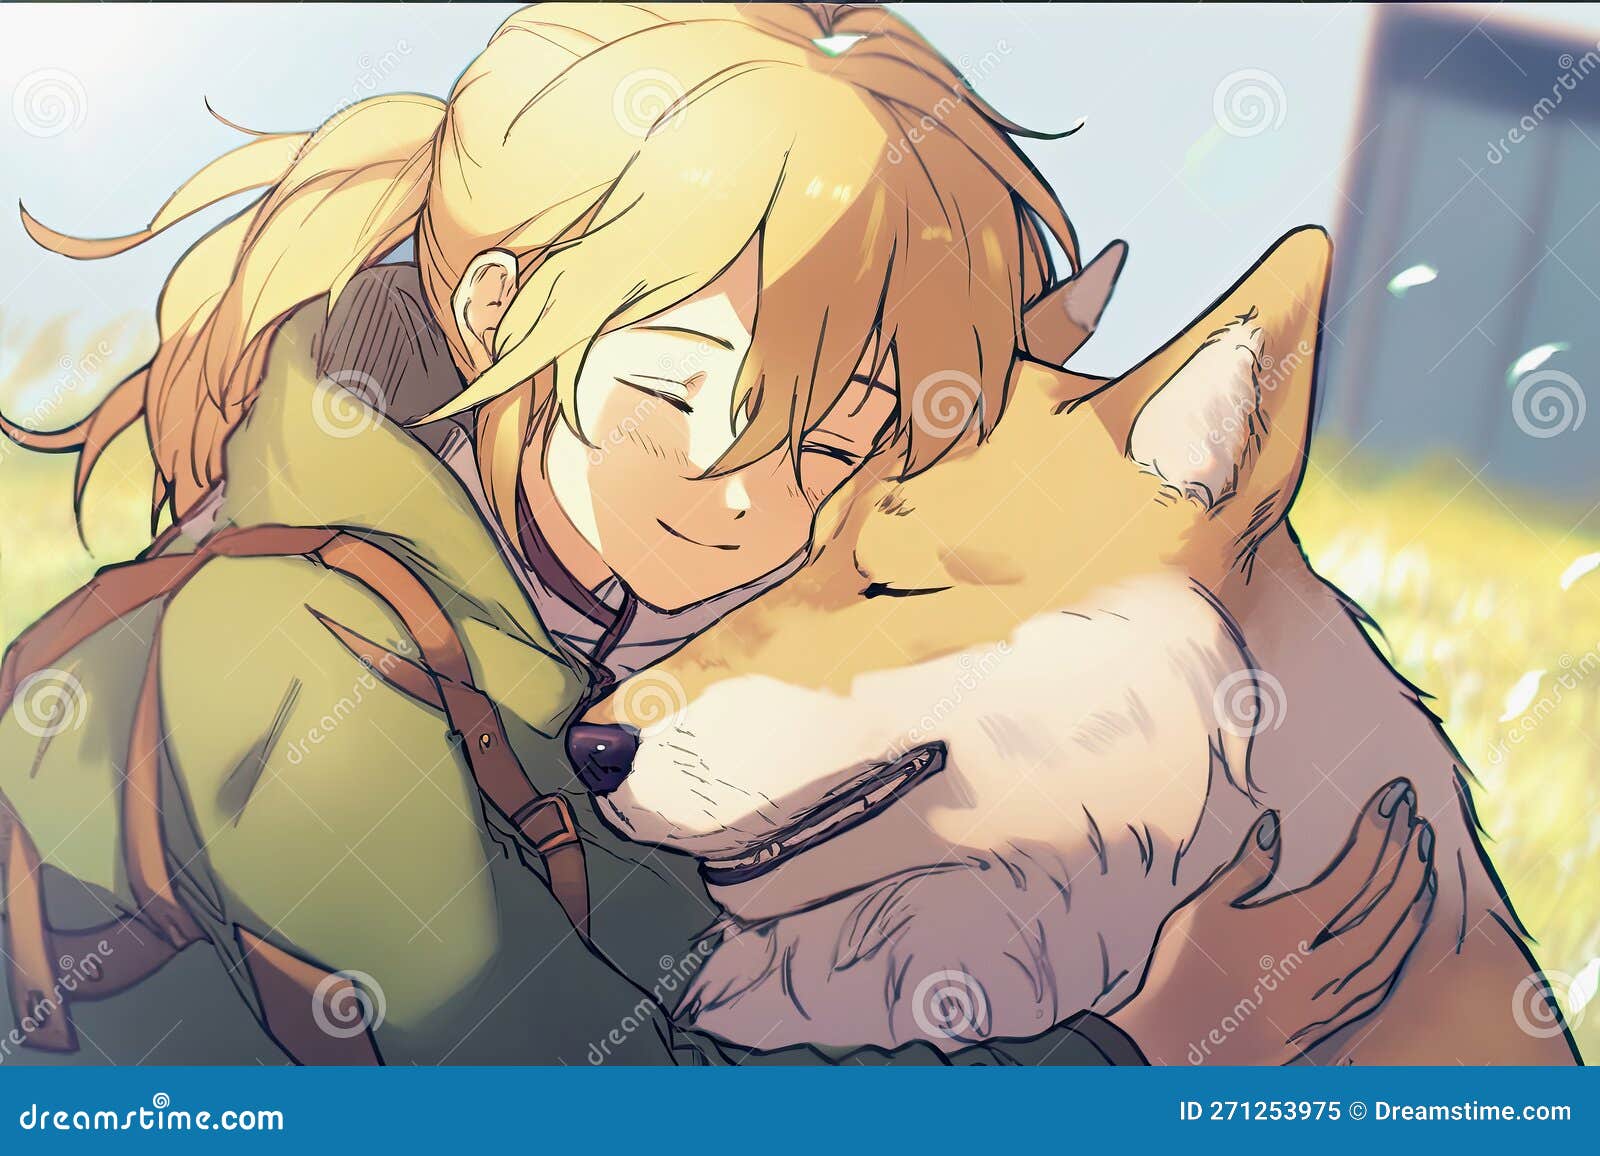 anime girl cuddling her dog generated ai illustration midjourney generative blonde haired 271253975